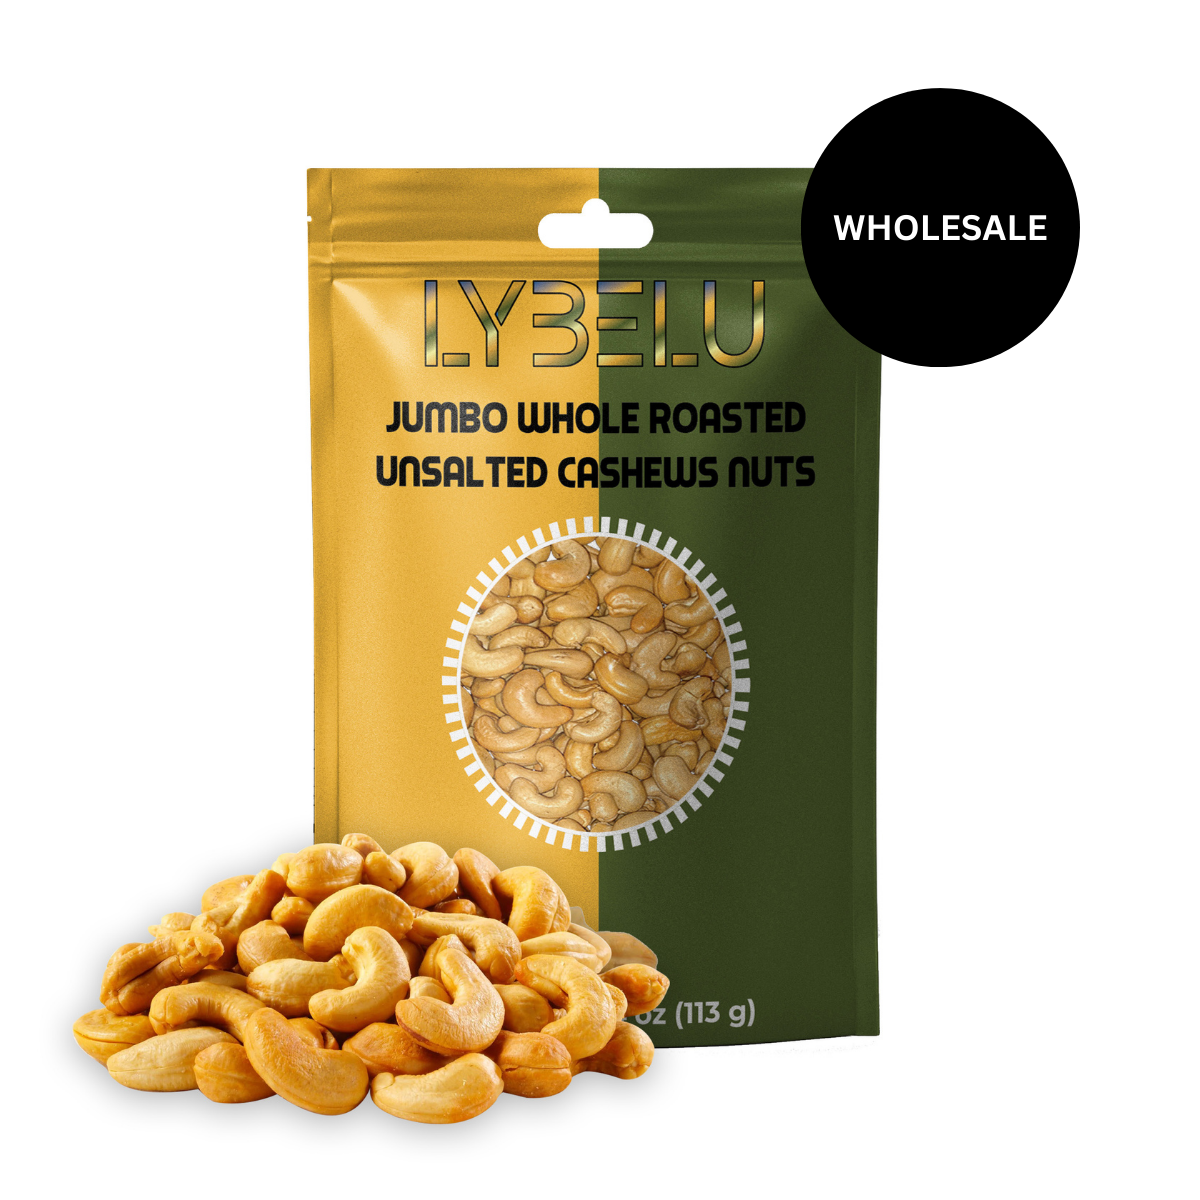 Jumbo Whole Roasted Unsalted Cashews Nuts – 4oz